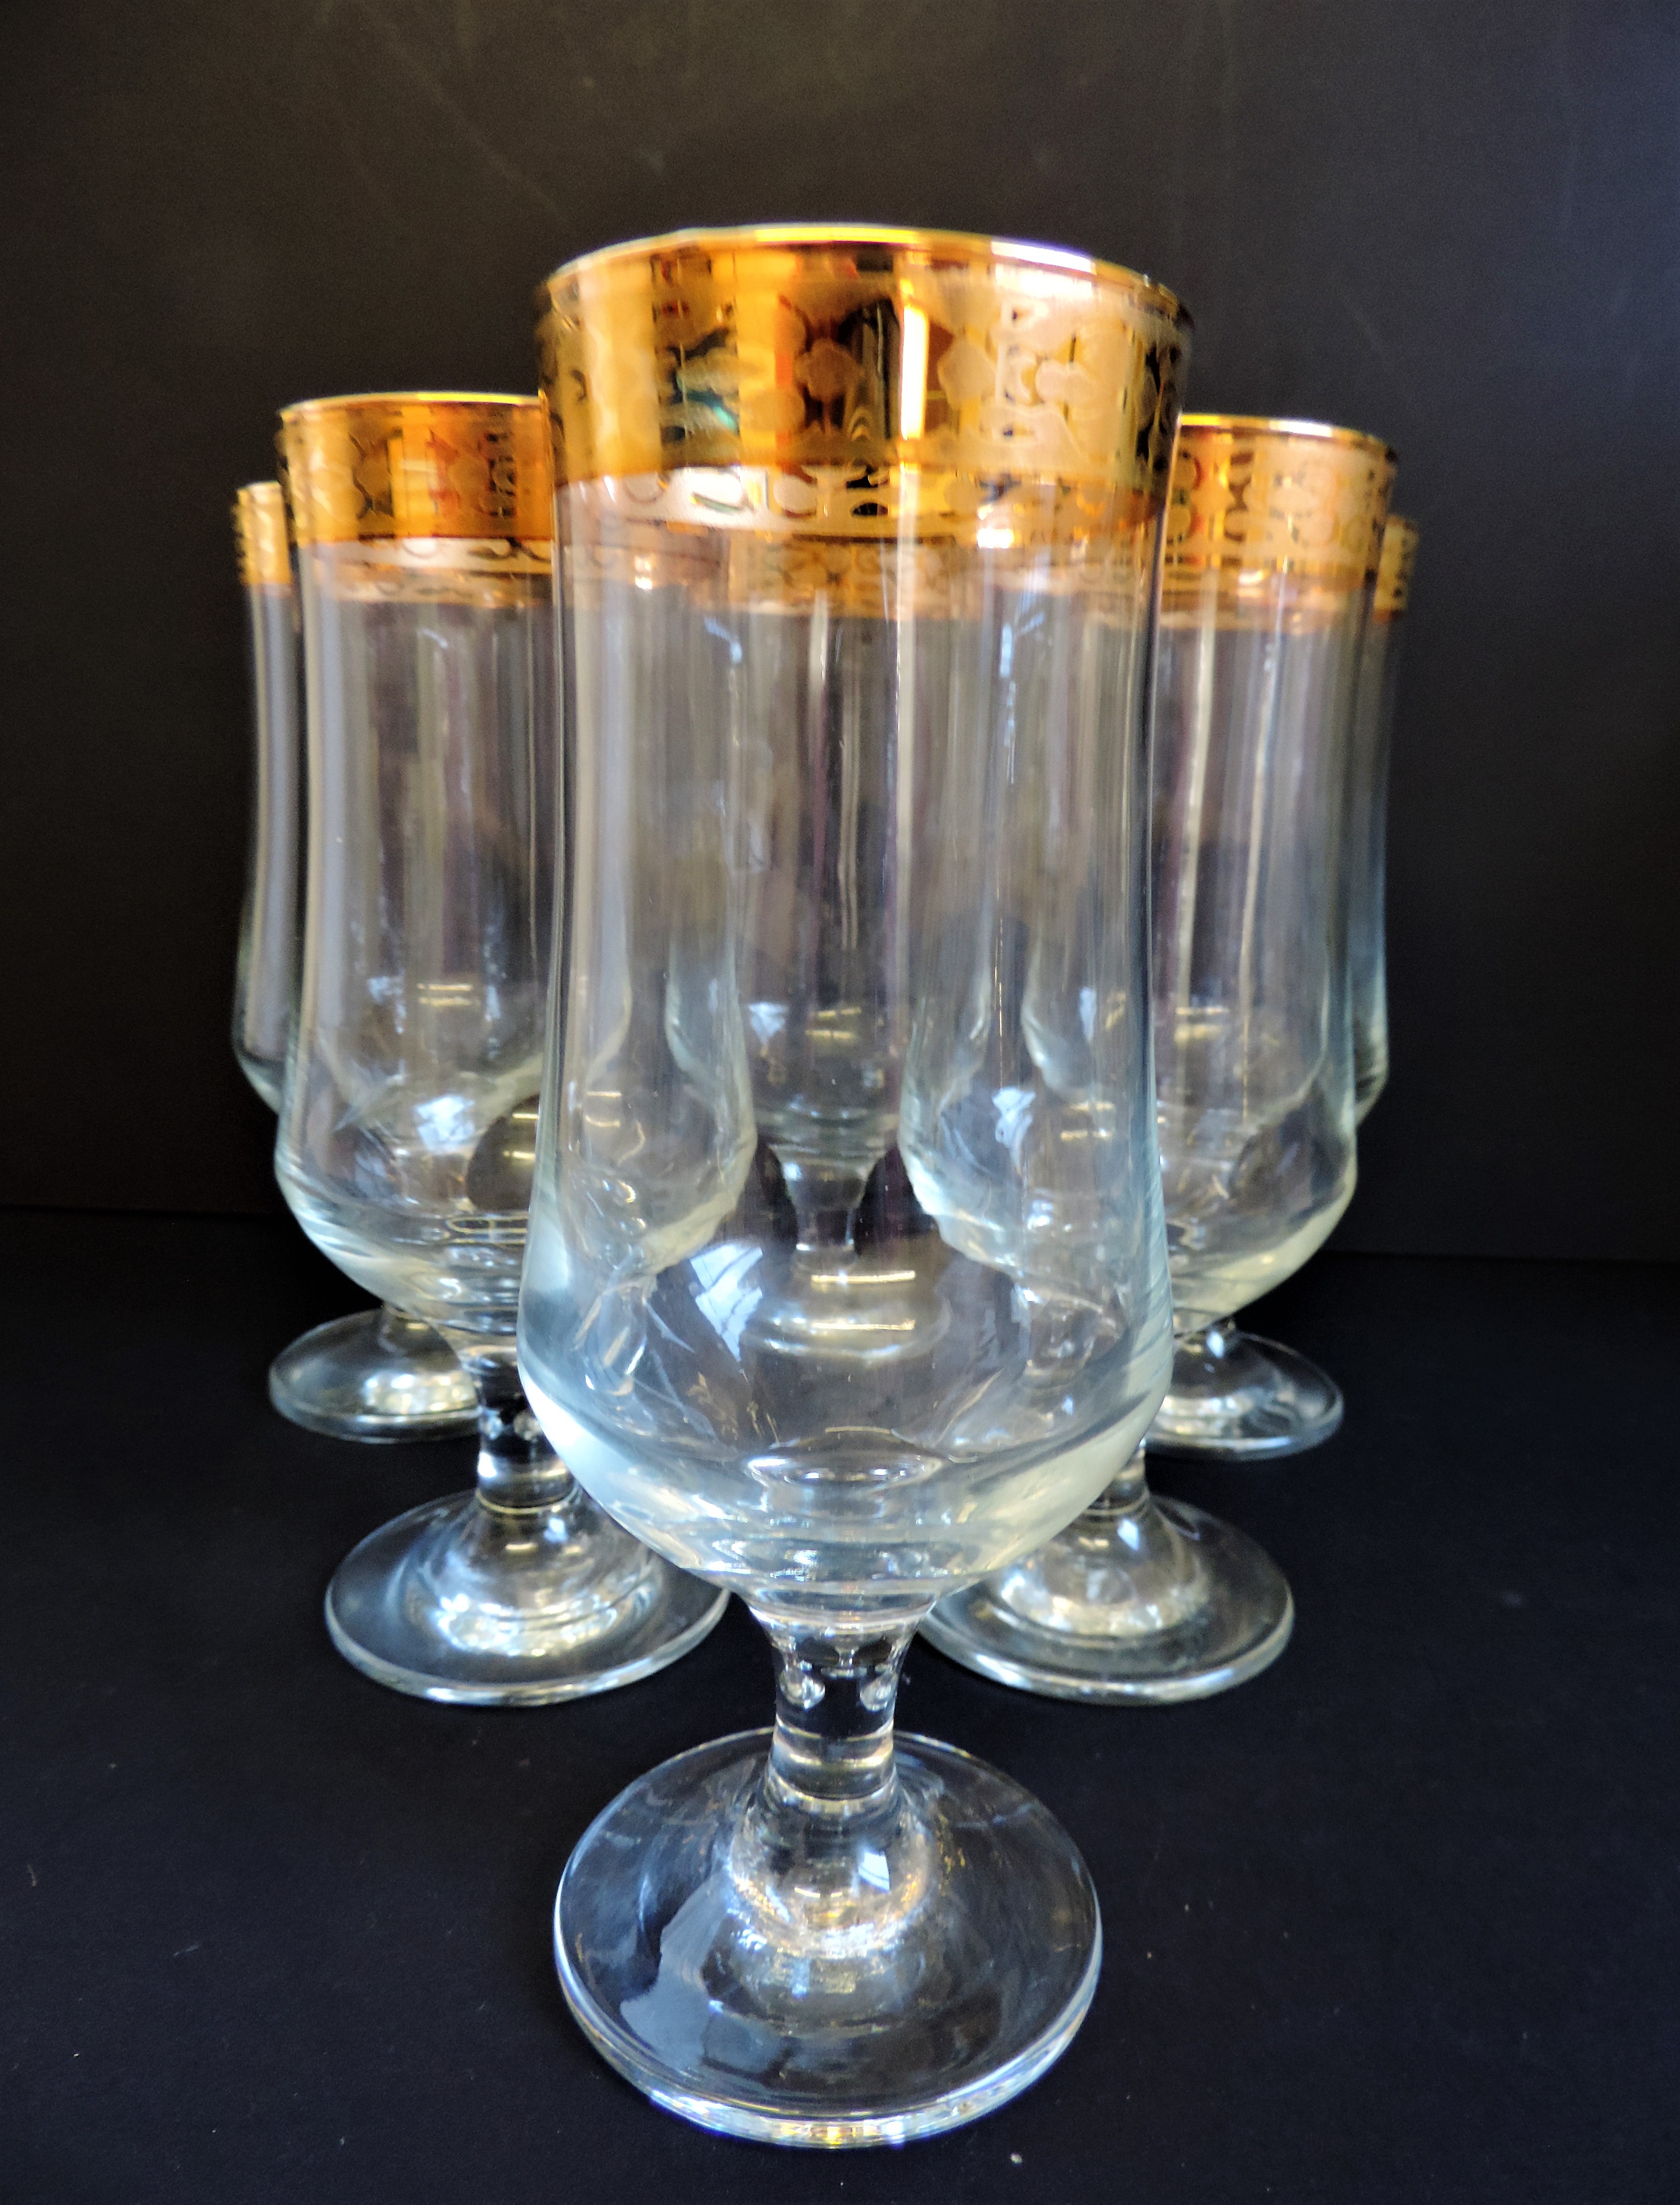 Vintage Venetian gold rimmed tall glasses for cocktails/sprintzers etc - Image 6 of 8